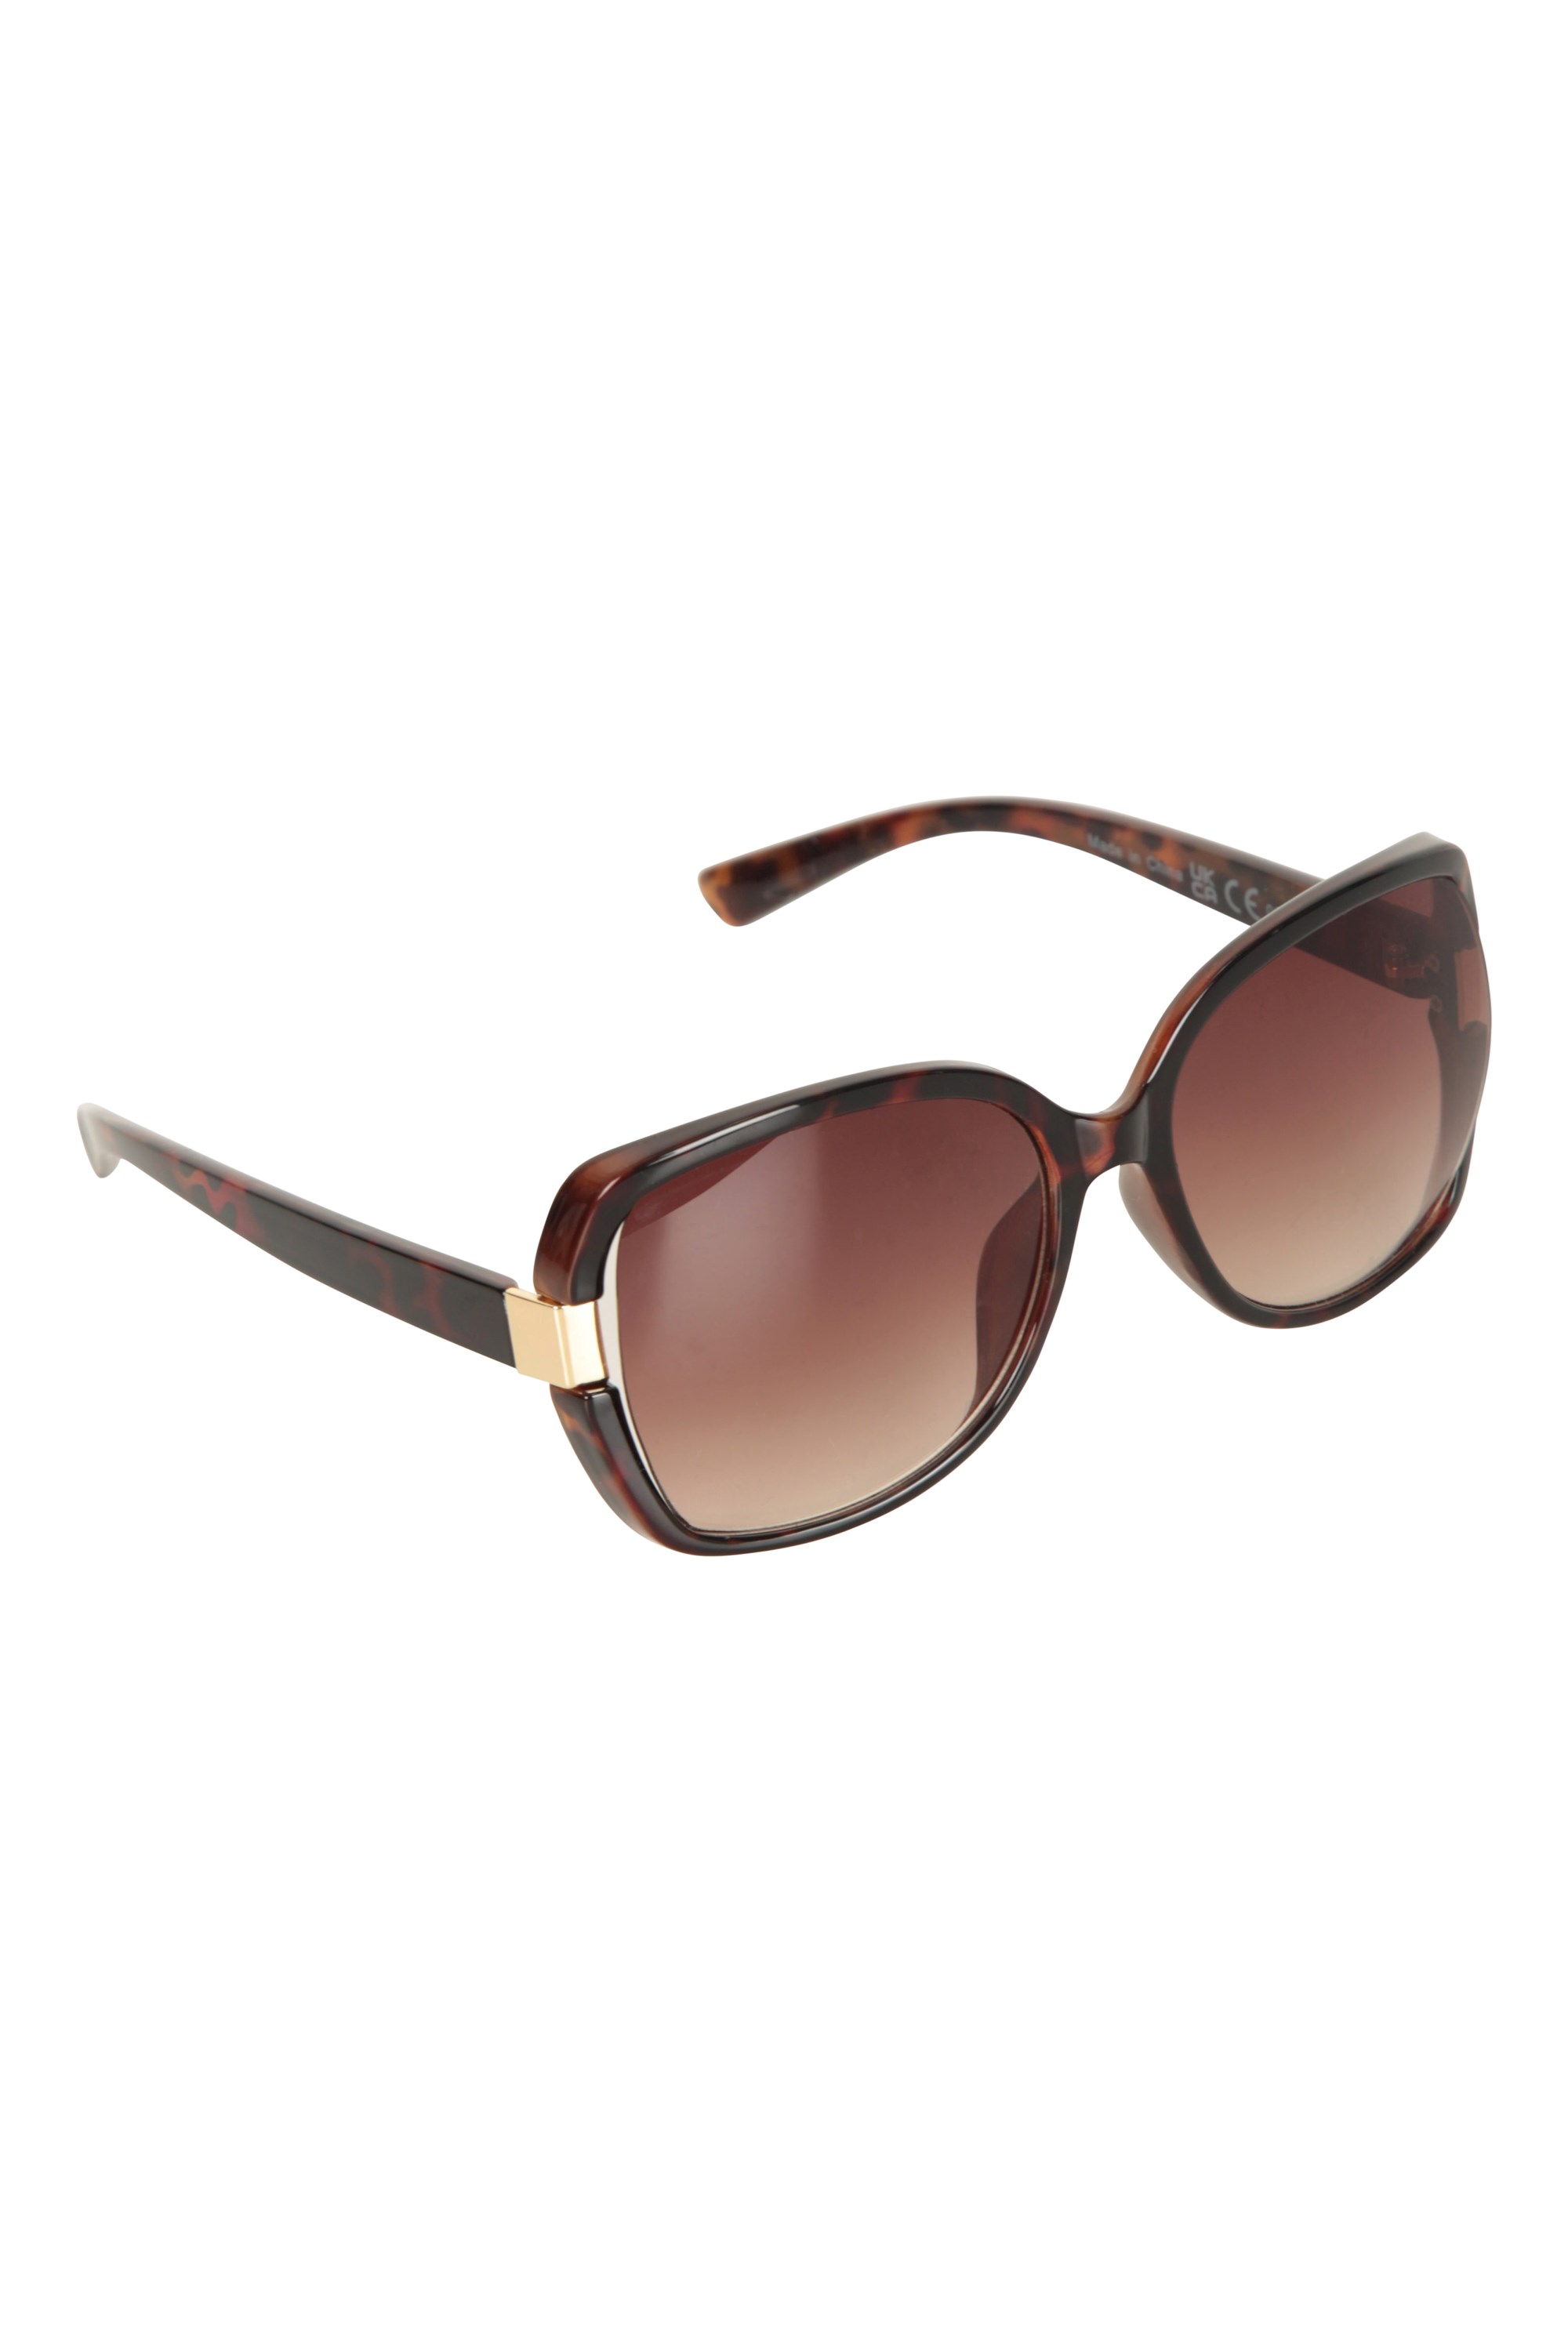 Sydney Womens Tortoise Sunglasses - Brown